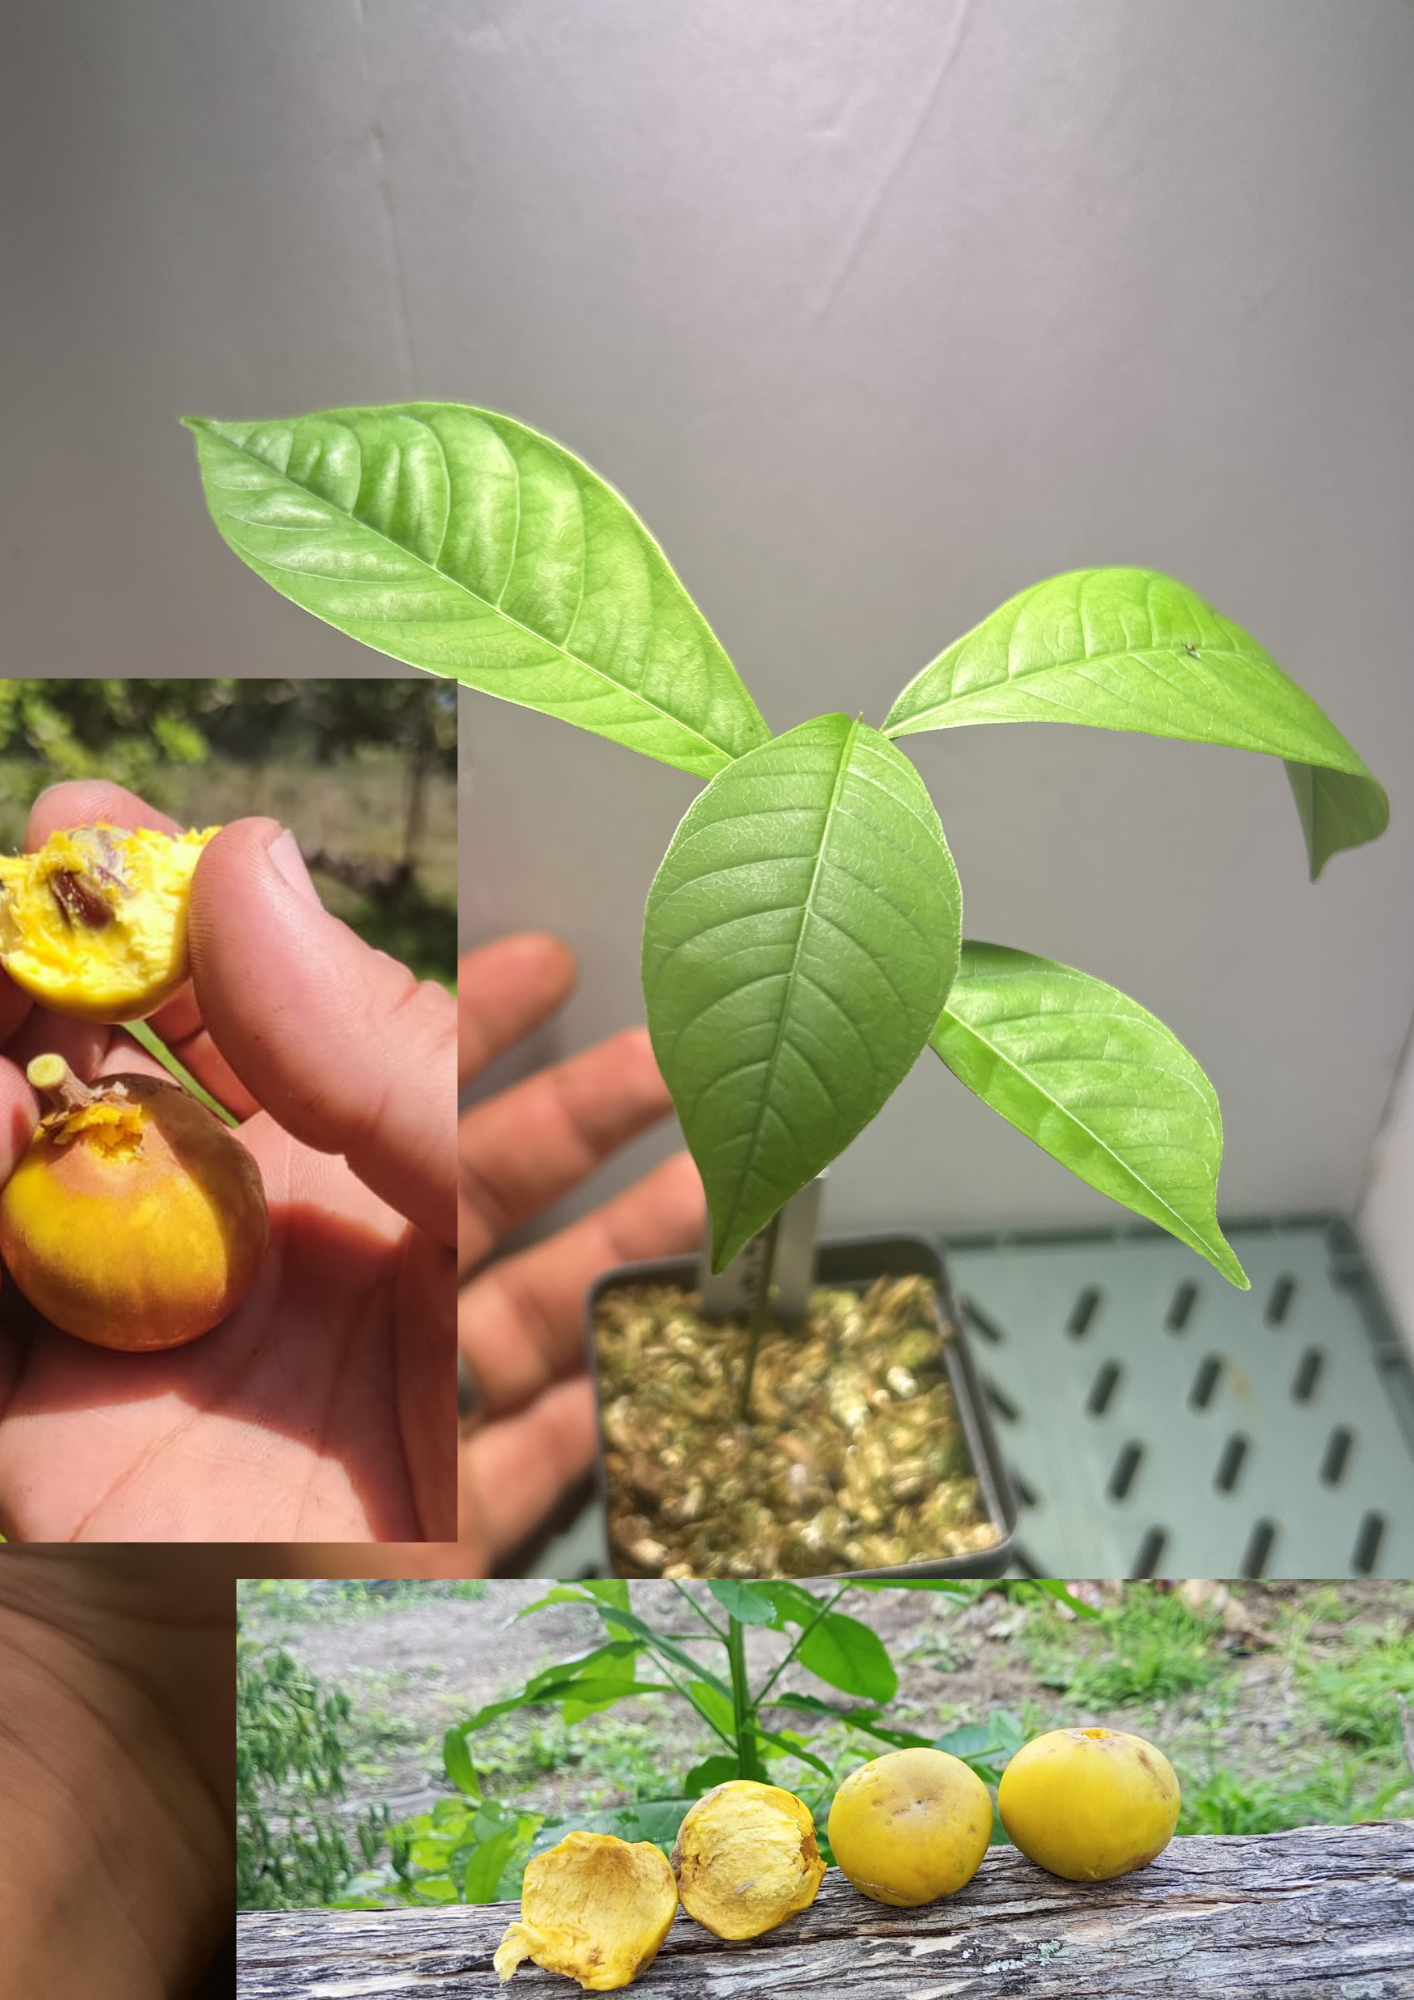 Pouteria macrophylla “Cutite” "Tuturuga" - Hapa Joe's Nursery - 40.00